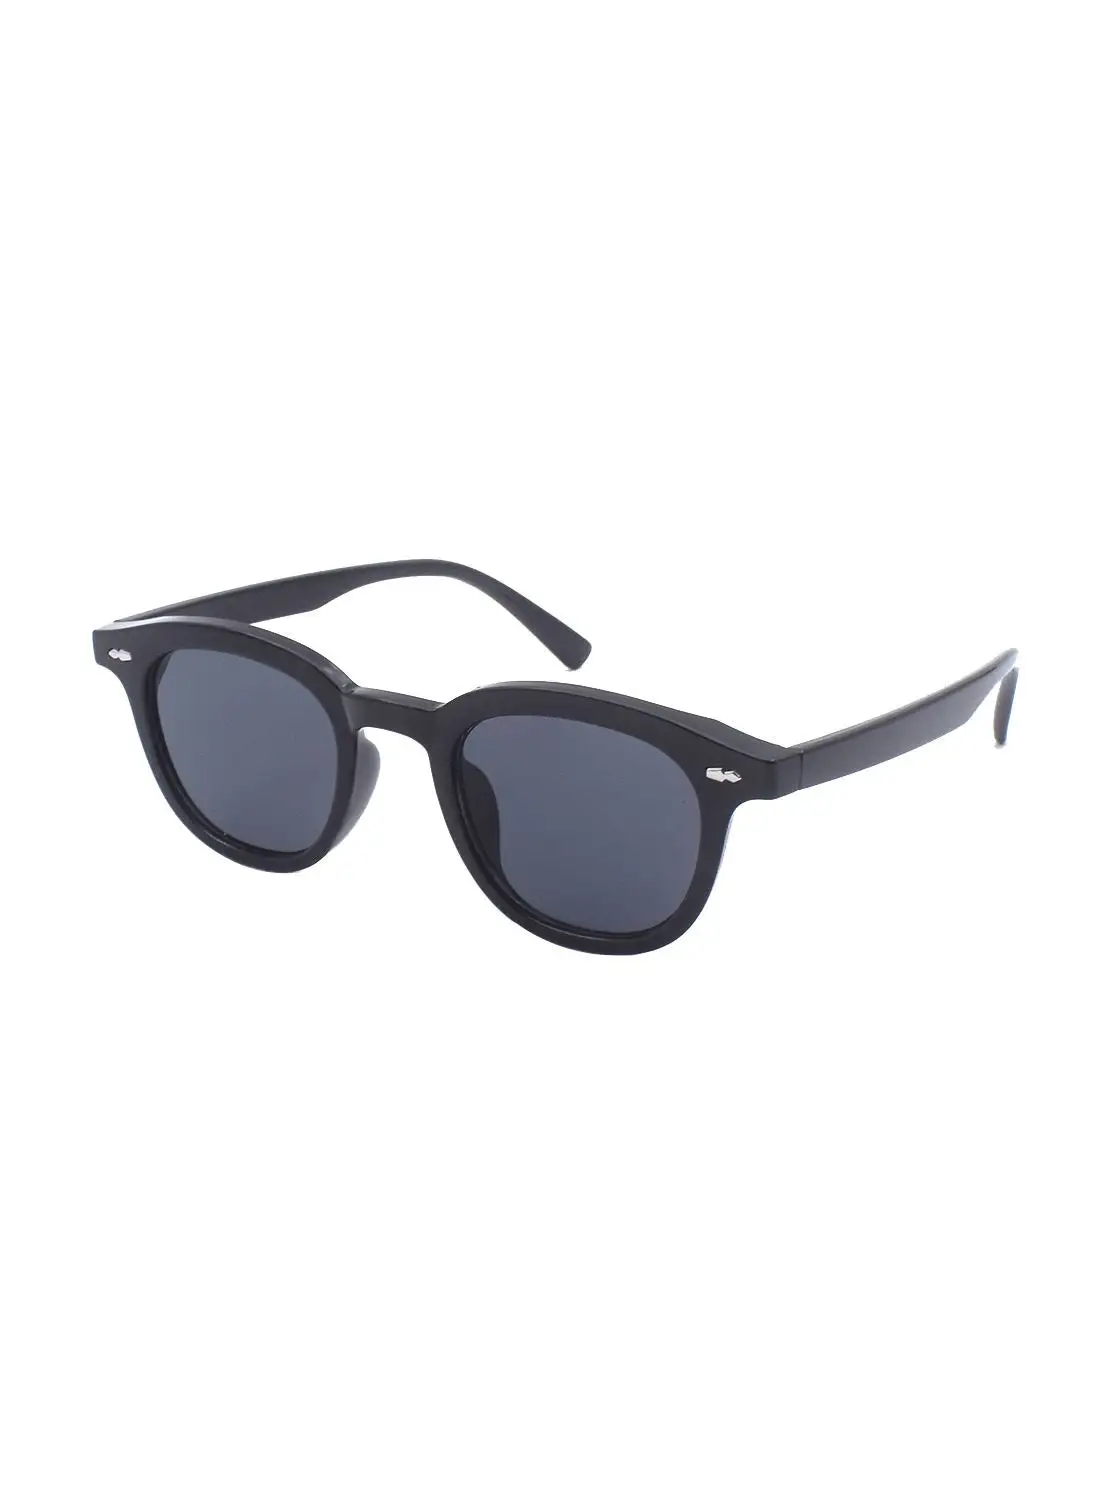 MADEYES Oval Sunglasses EE20X066-1